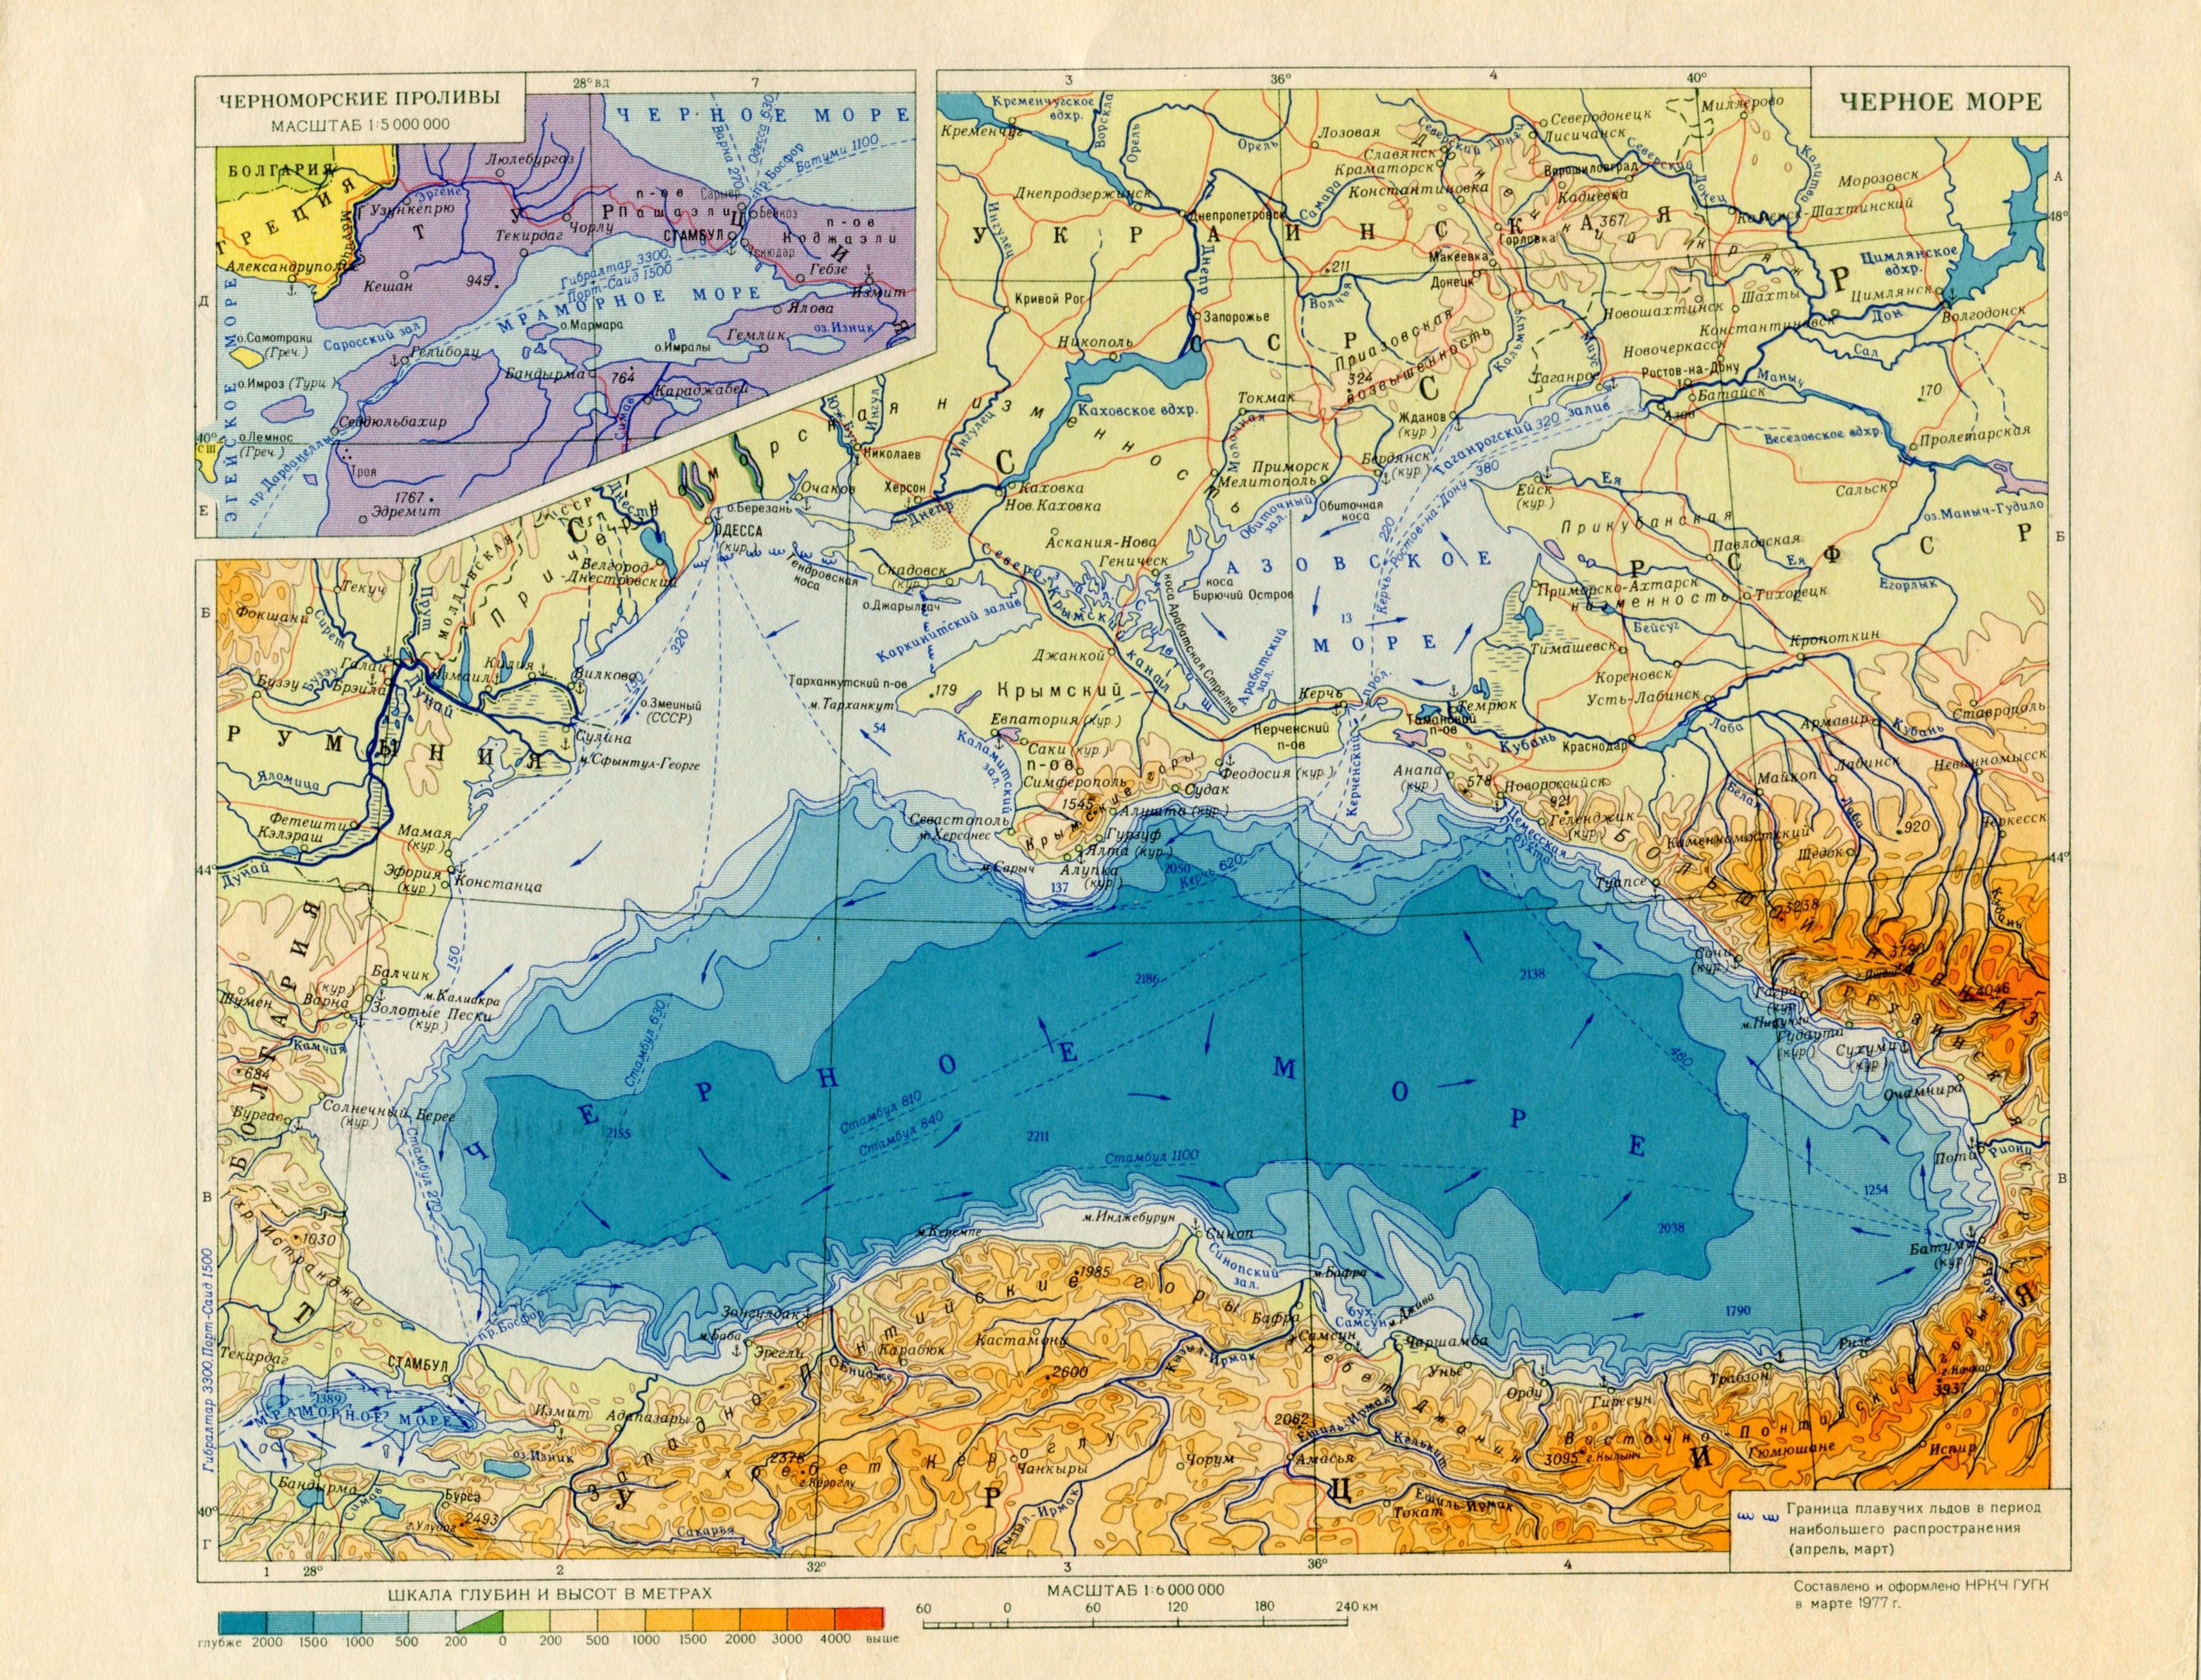 Азовский залив на карте. Карта черного моря с заливами и проливами. Карта глубин черного моря. Заливы и проливы черного моря. Карта глубин черного моря у Крыма.